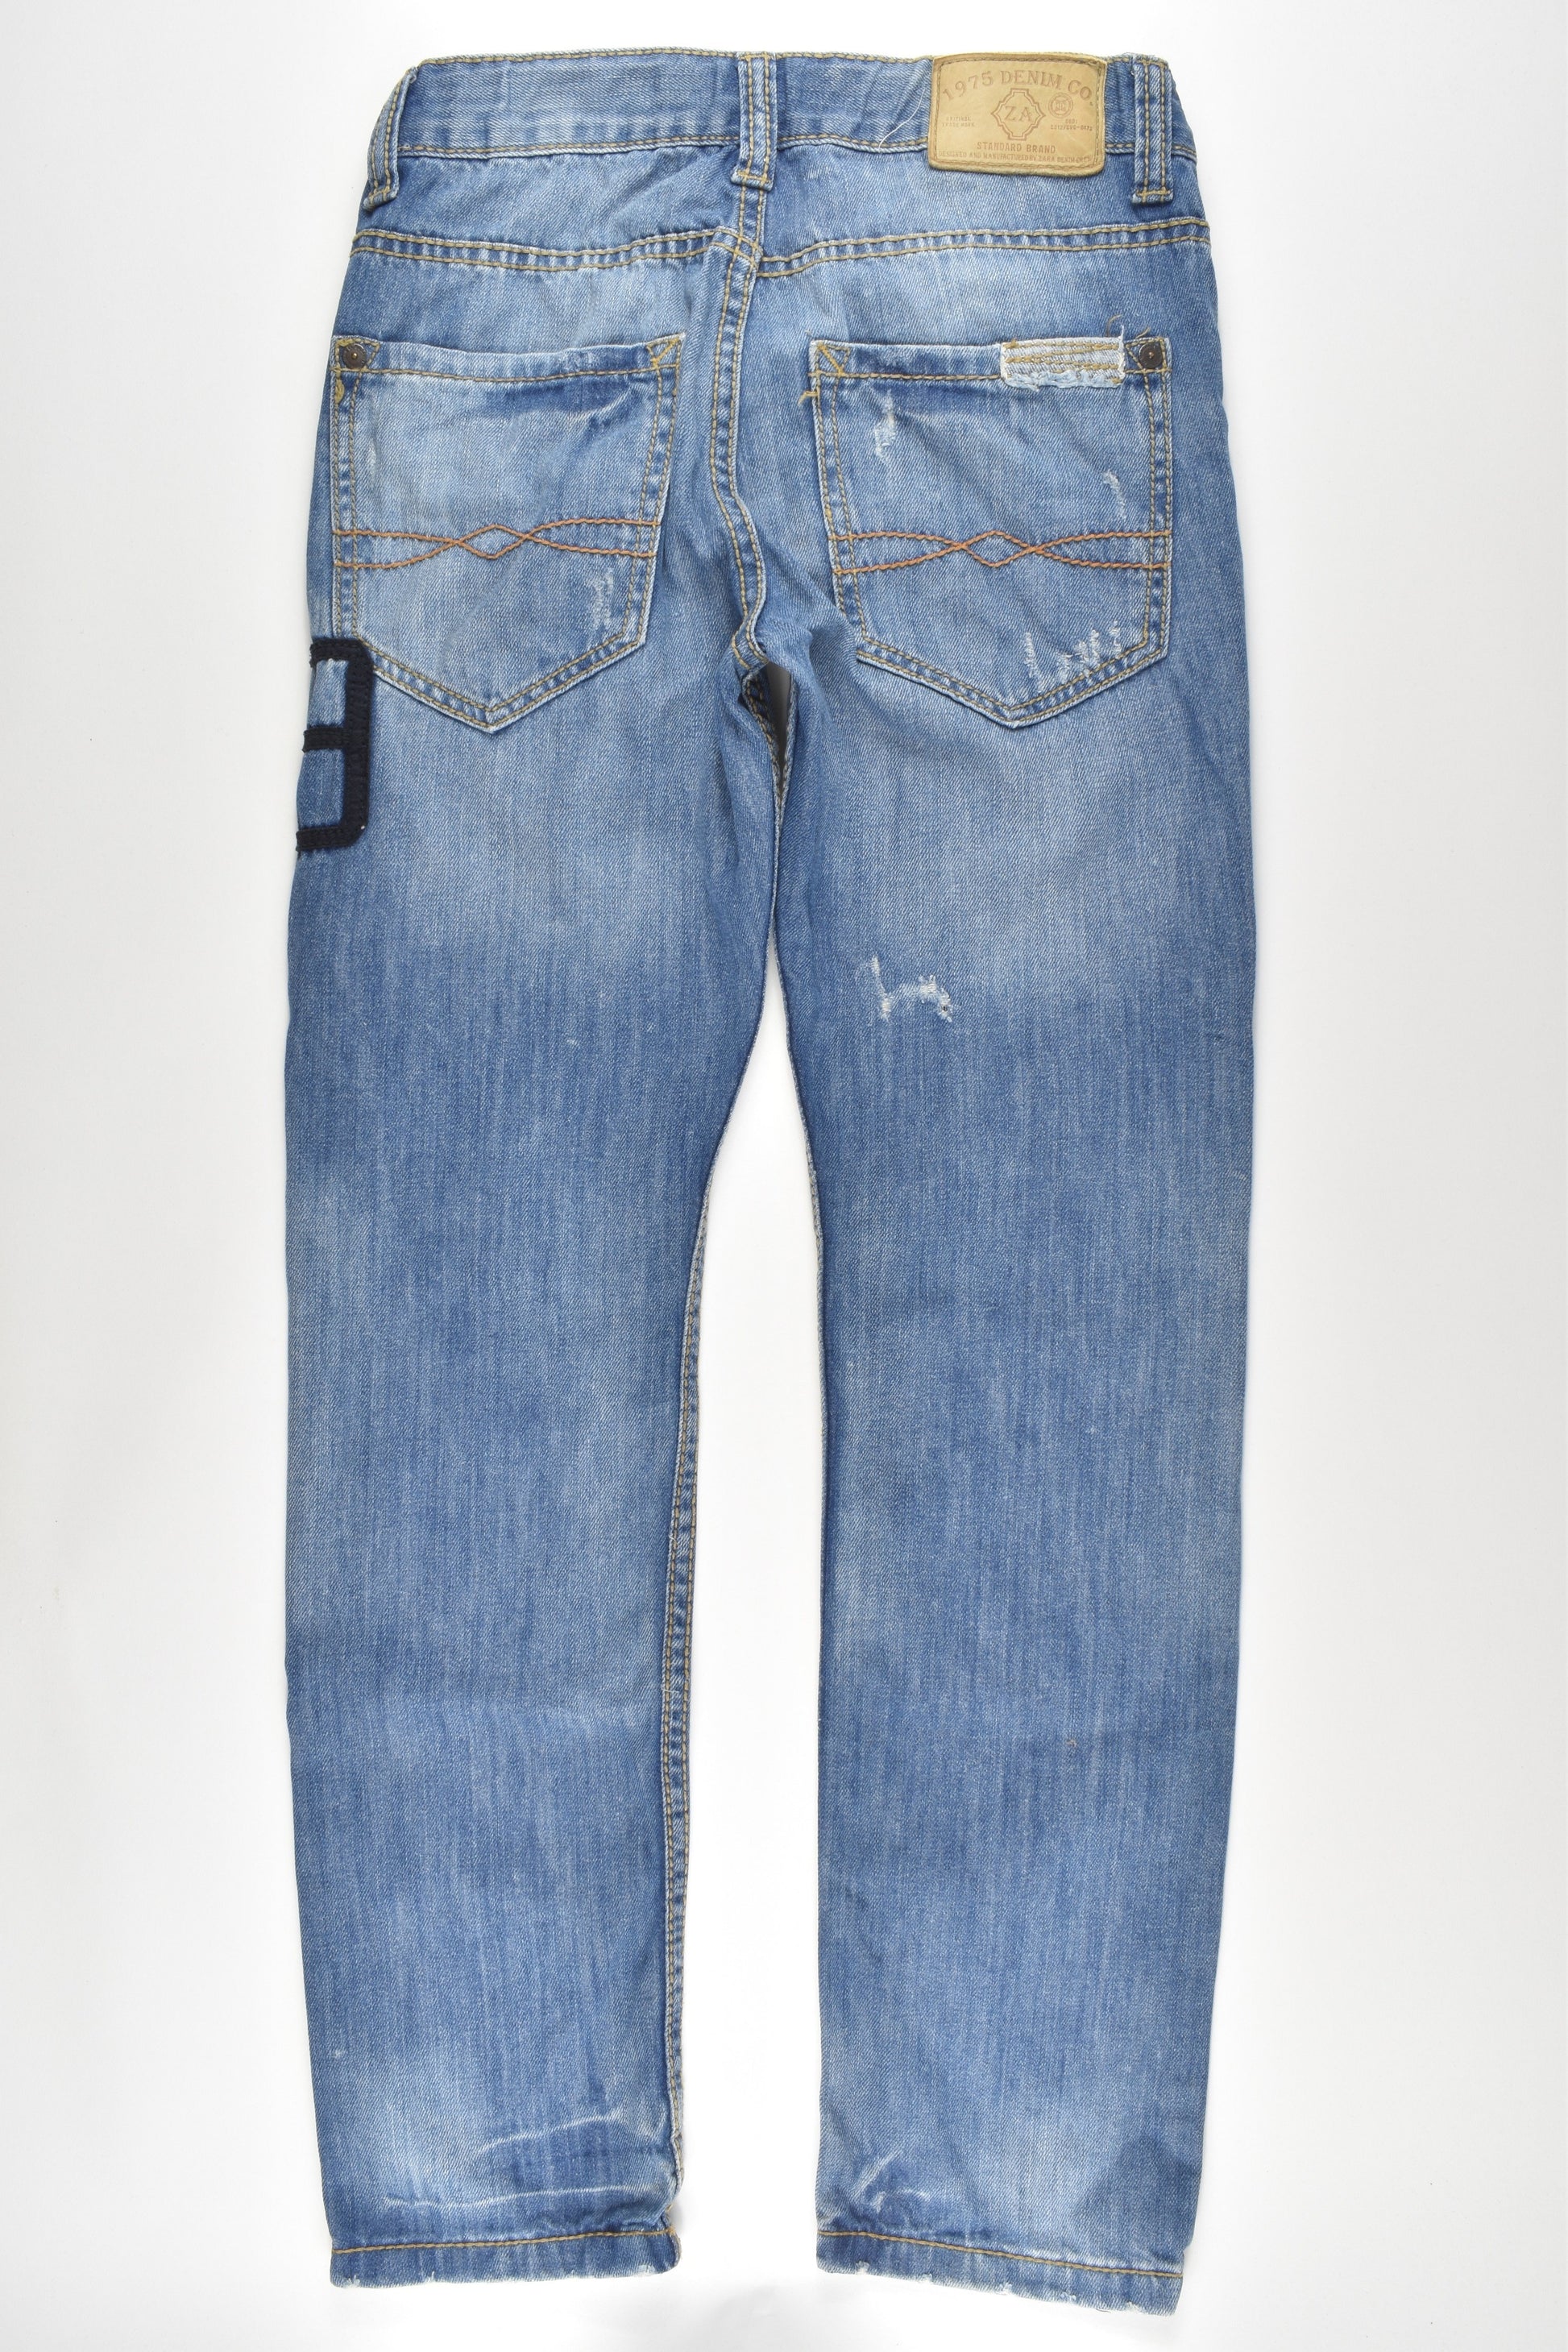 Zara Boys Size 9-10 (Generous sizing) Denim Pants